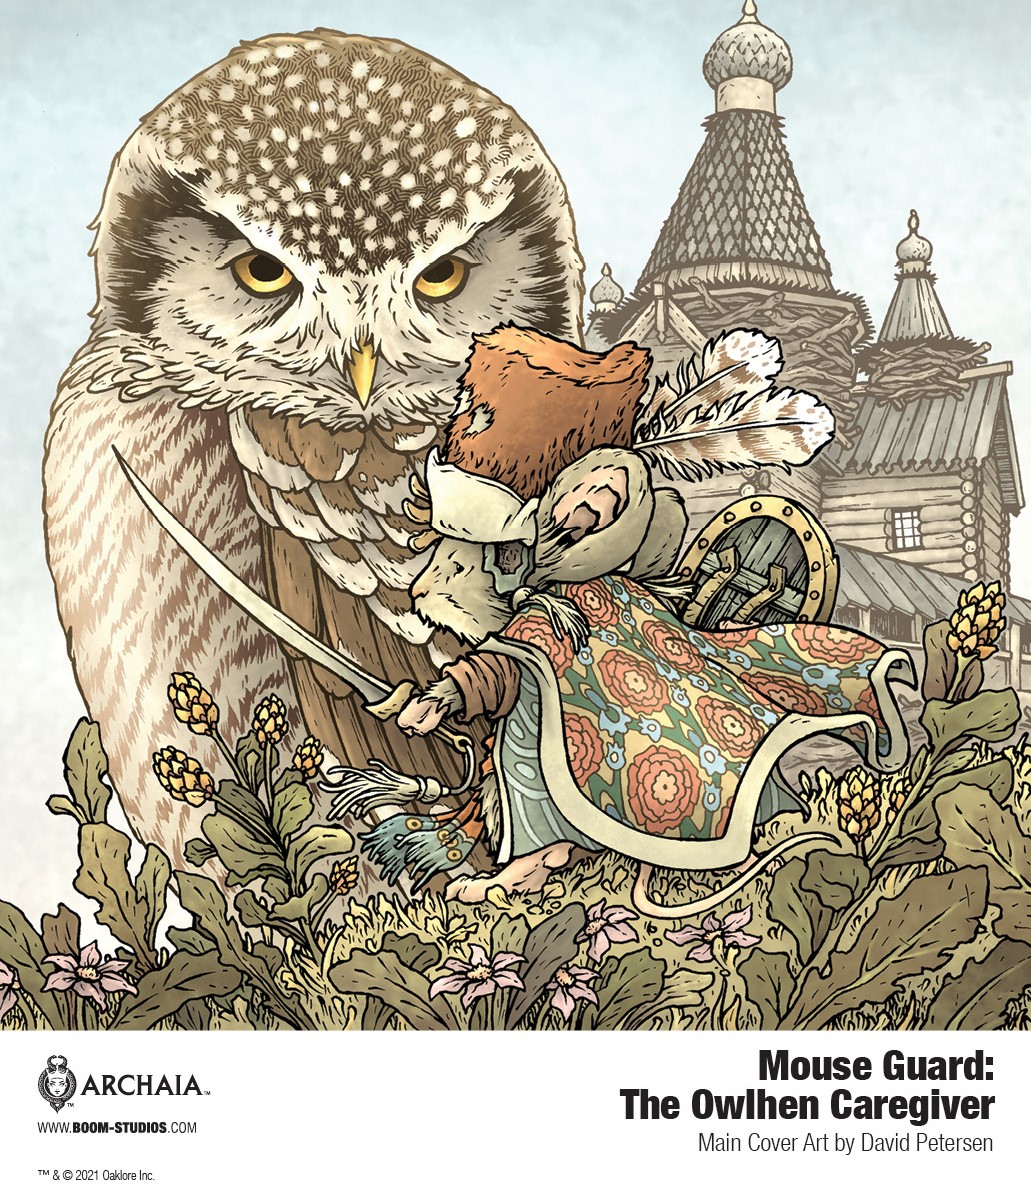 Mouse Gard: The Owlhen Caregiver